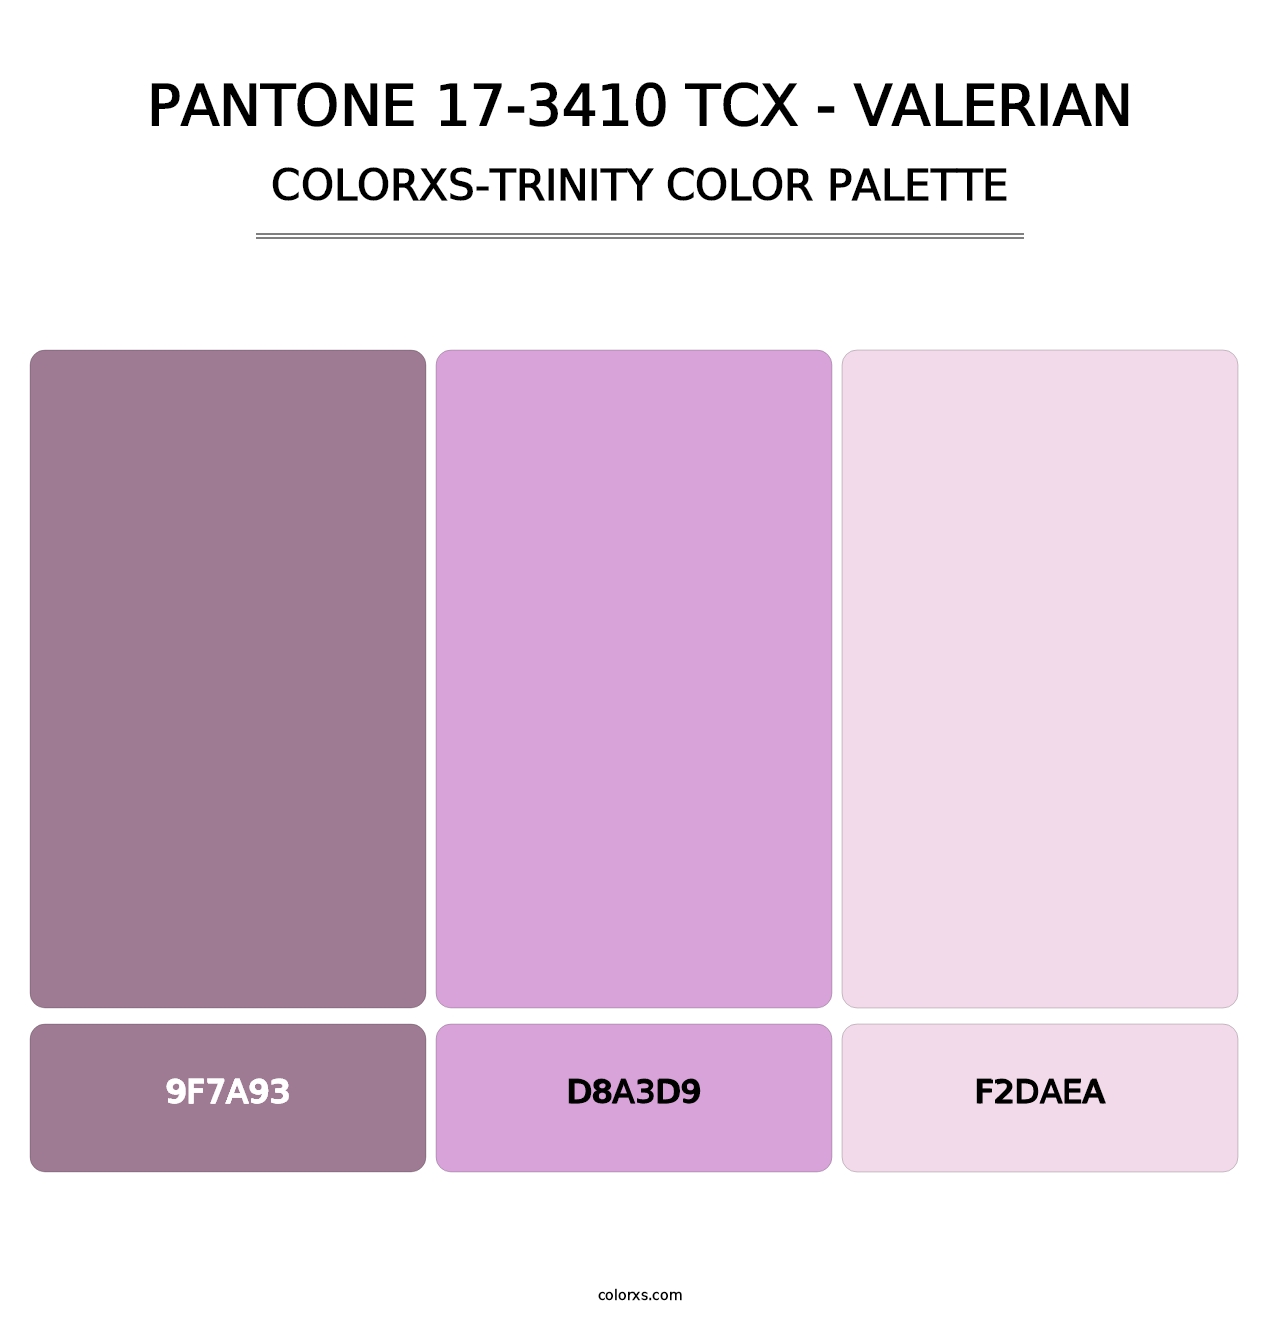 PANTONE 17-3410 TCX - Valerian - Colorxs Trinity Palette